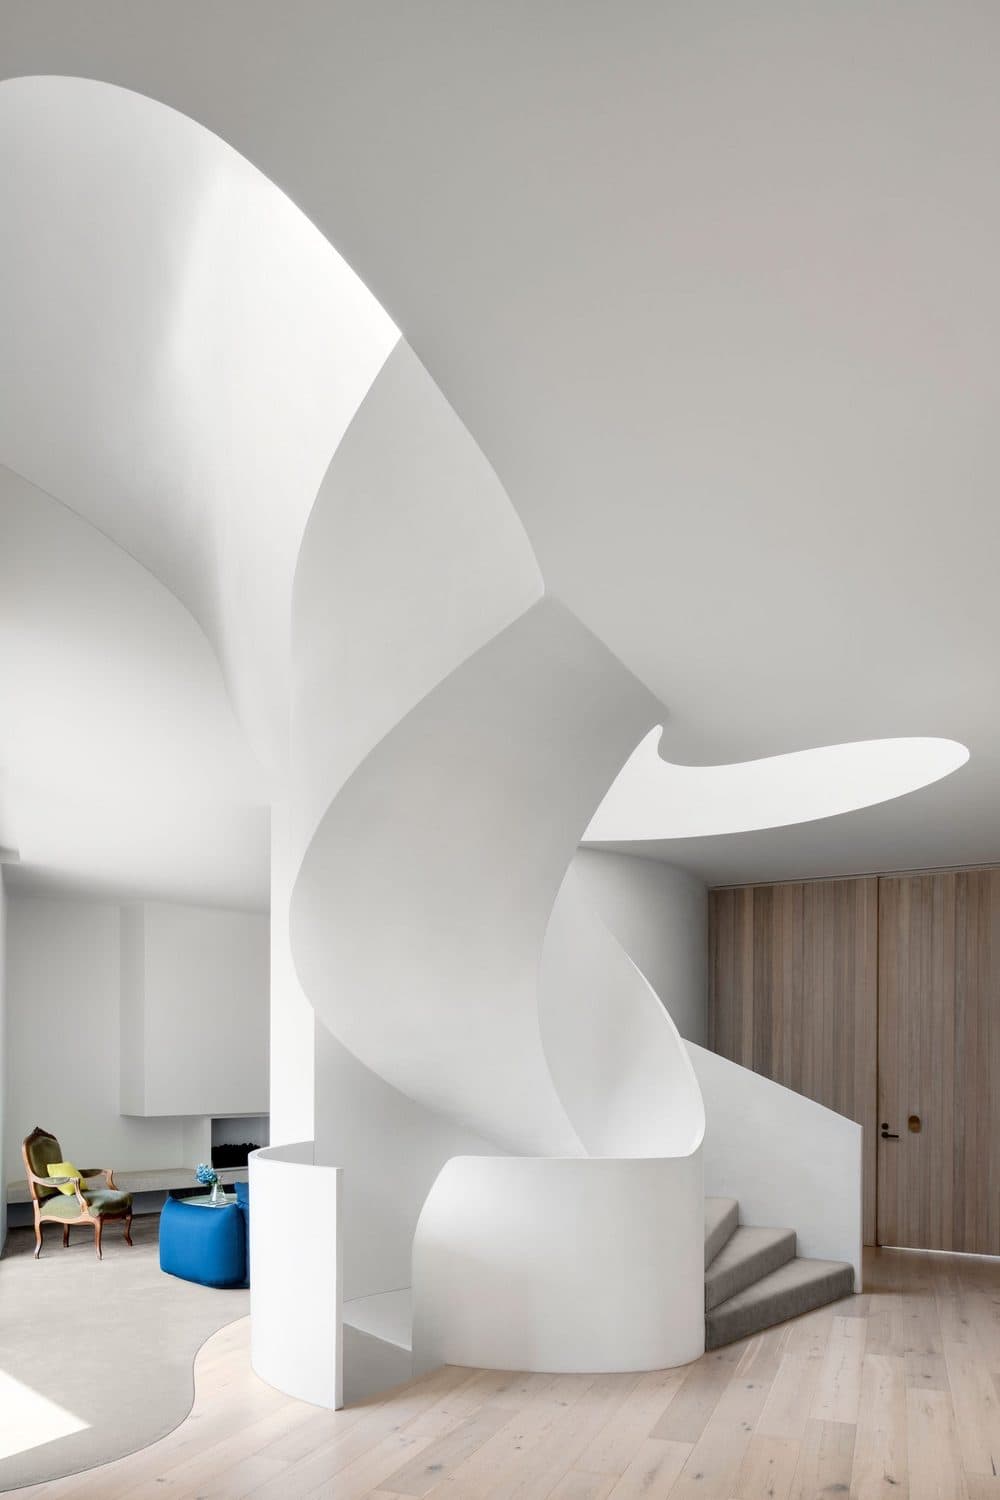 Birch Tree House by Susi Leeton Architects + Interiors